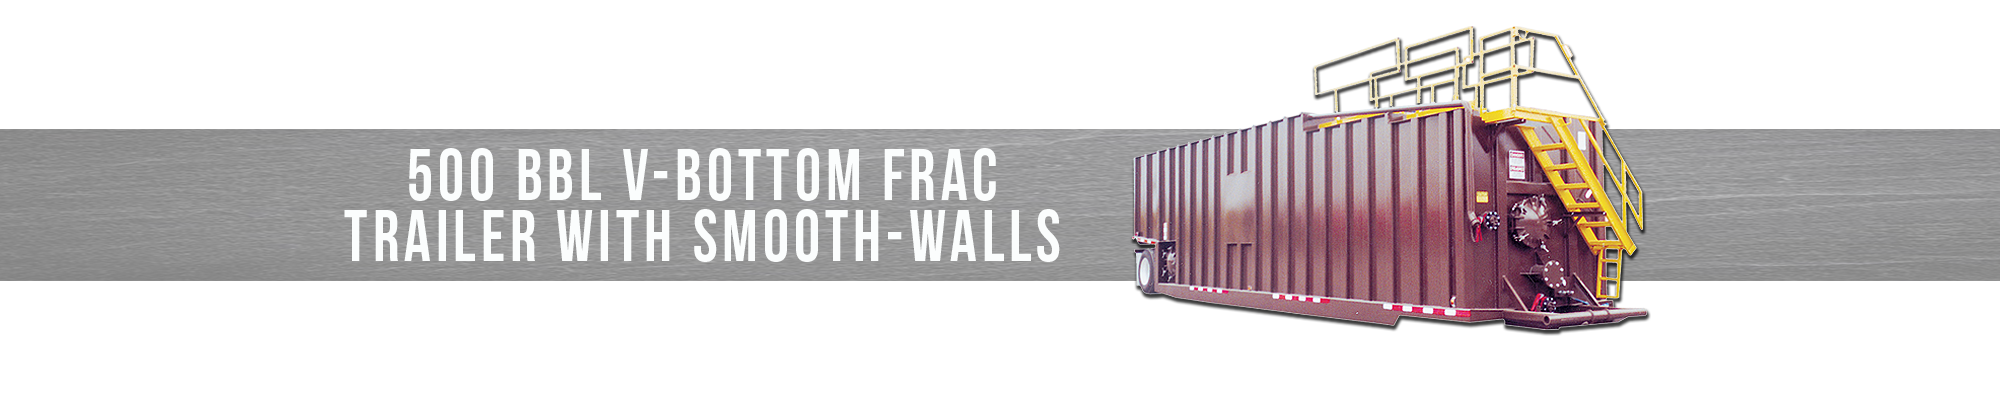 500 BBL V-Bottom Frac Trailer with Smooth-Walls